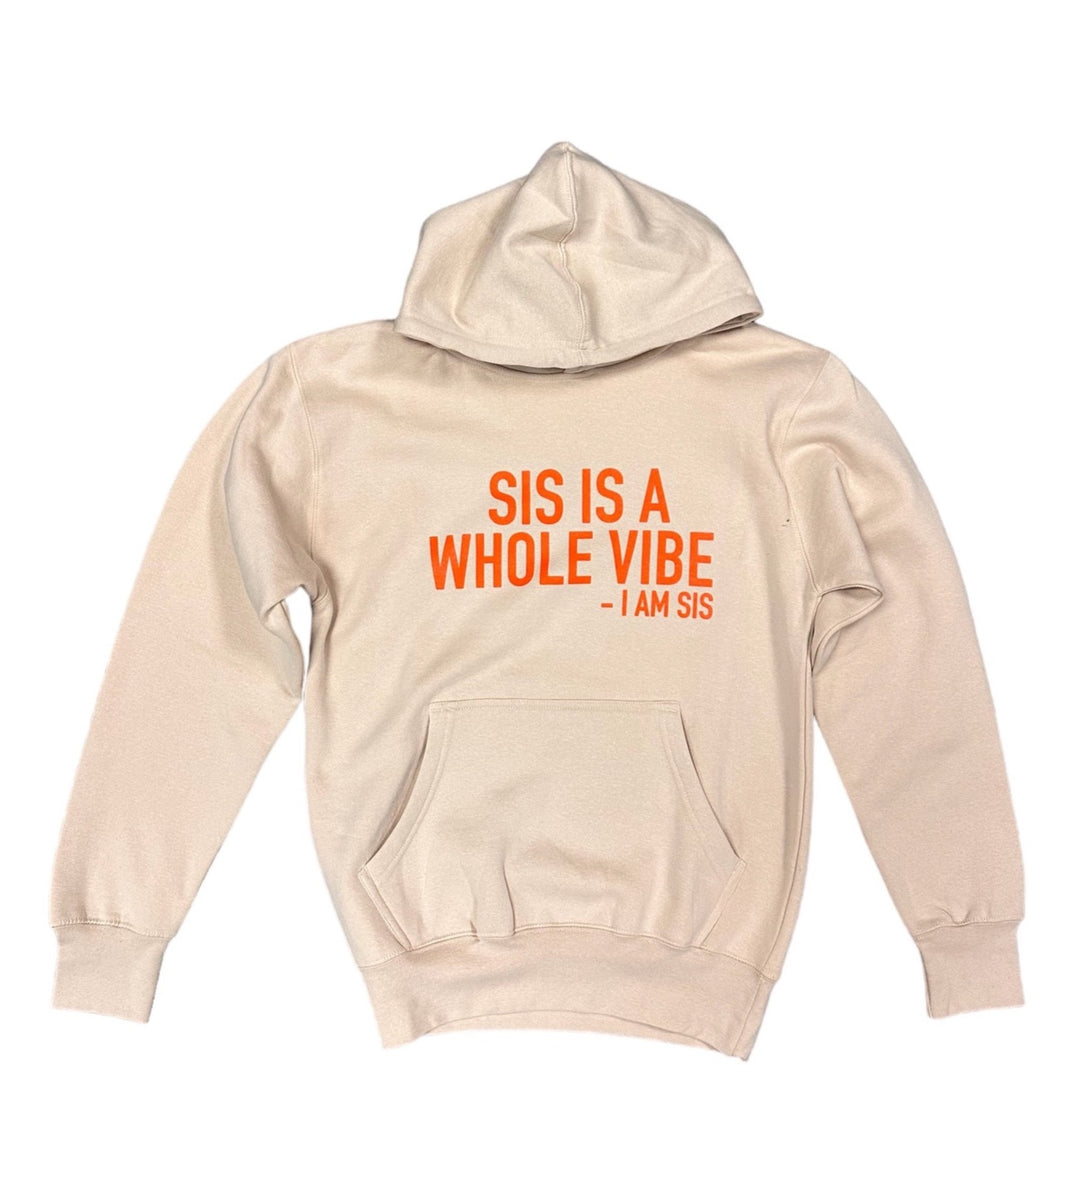 Sis is a Whole Vibe -I AM SIS {Tan}